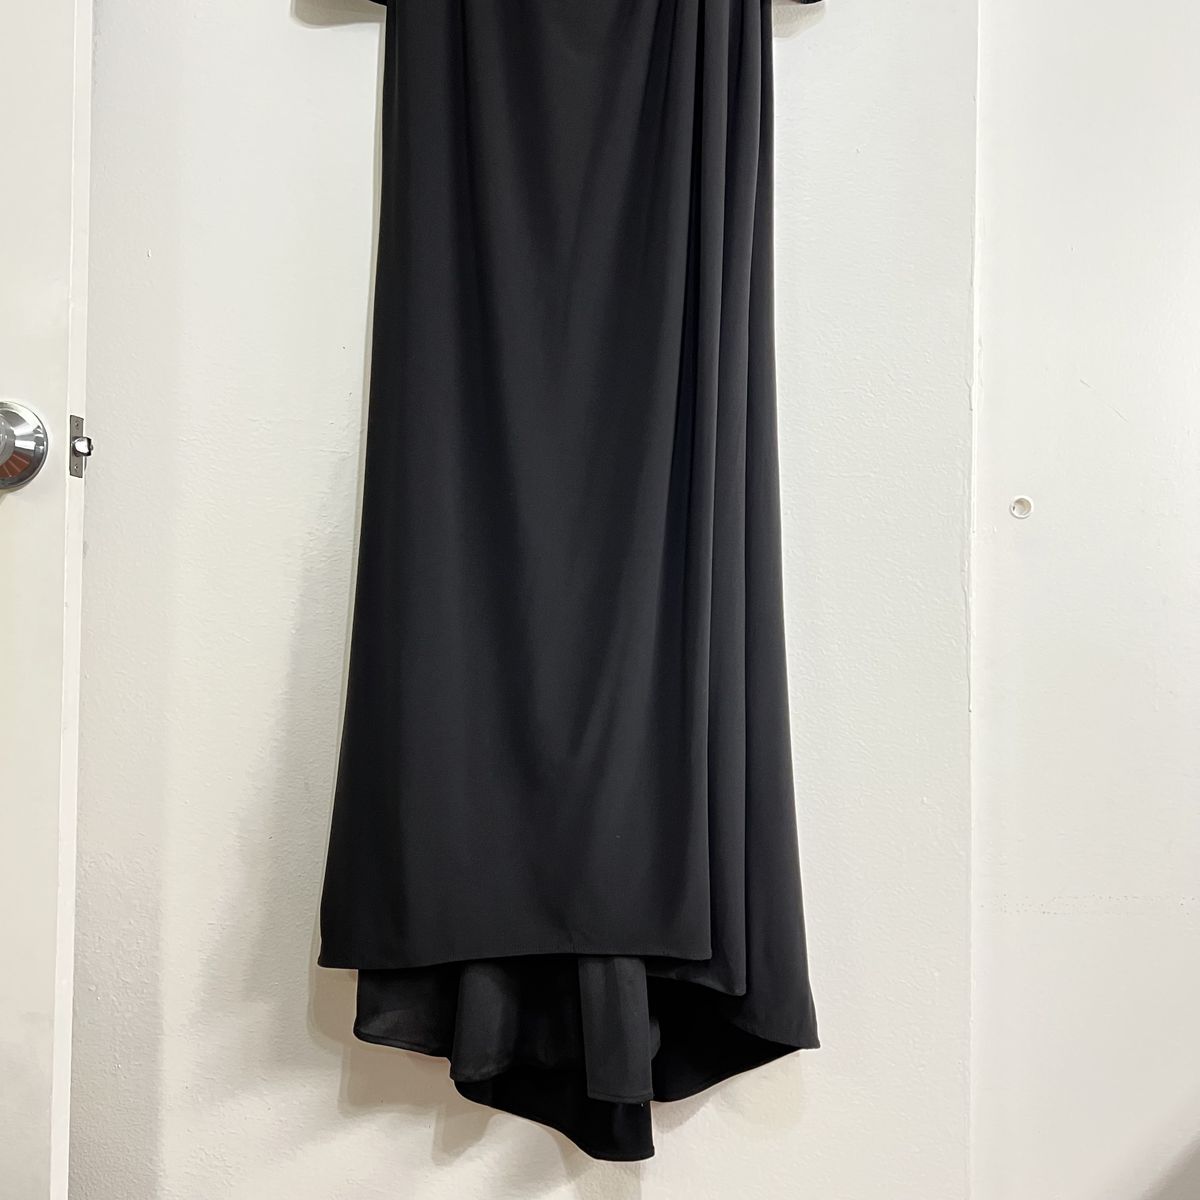 Style 29044 La Femme Plus Size 24 Plunge Black Side Slit Dress on Queenly